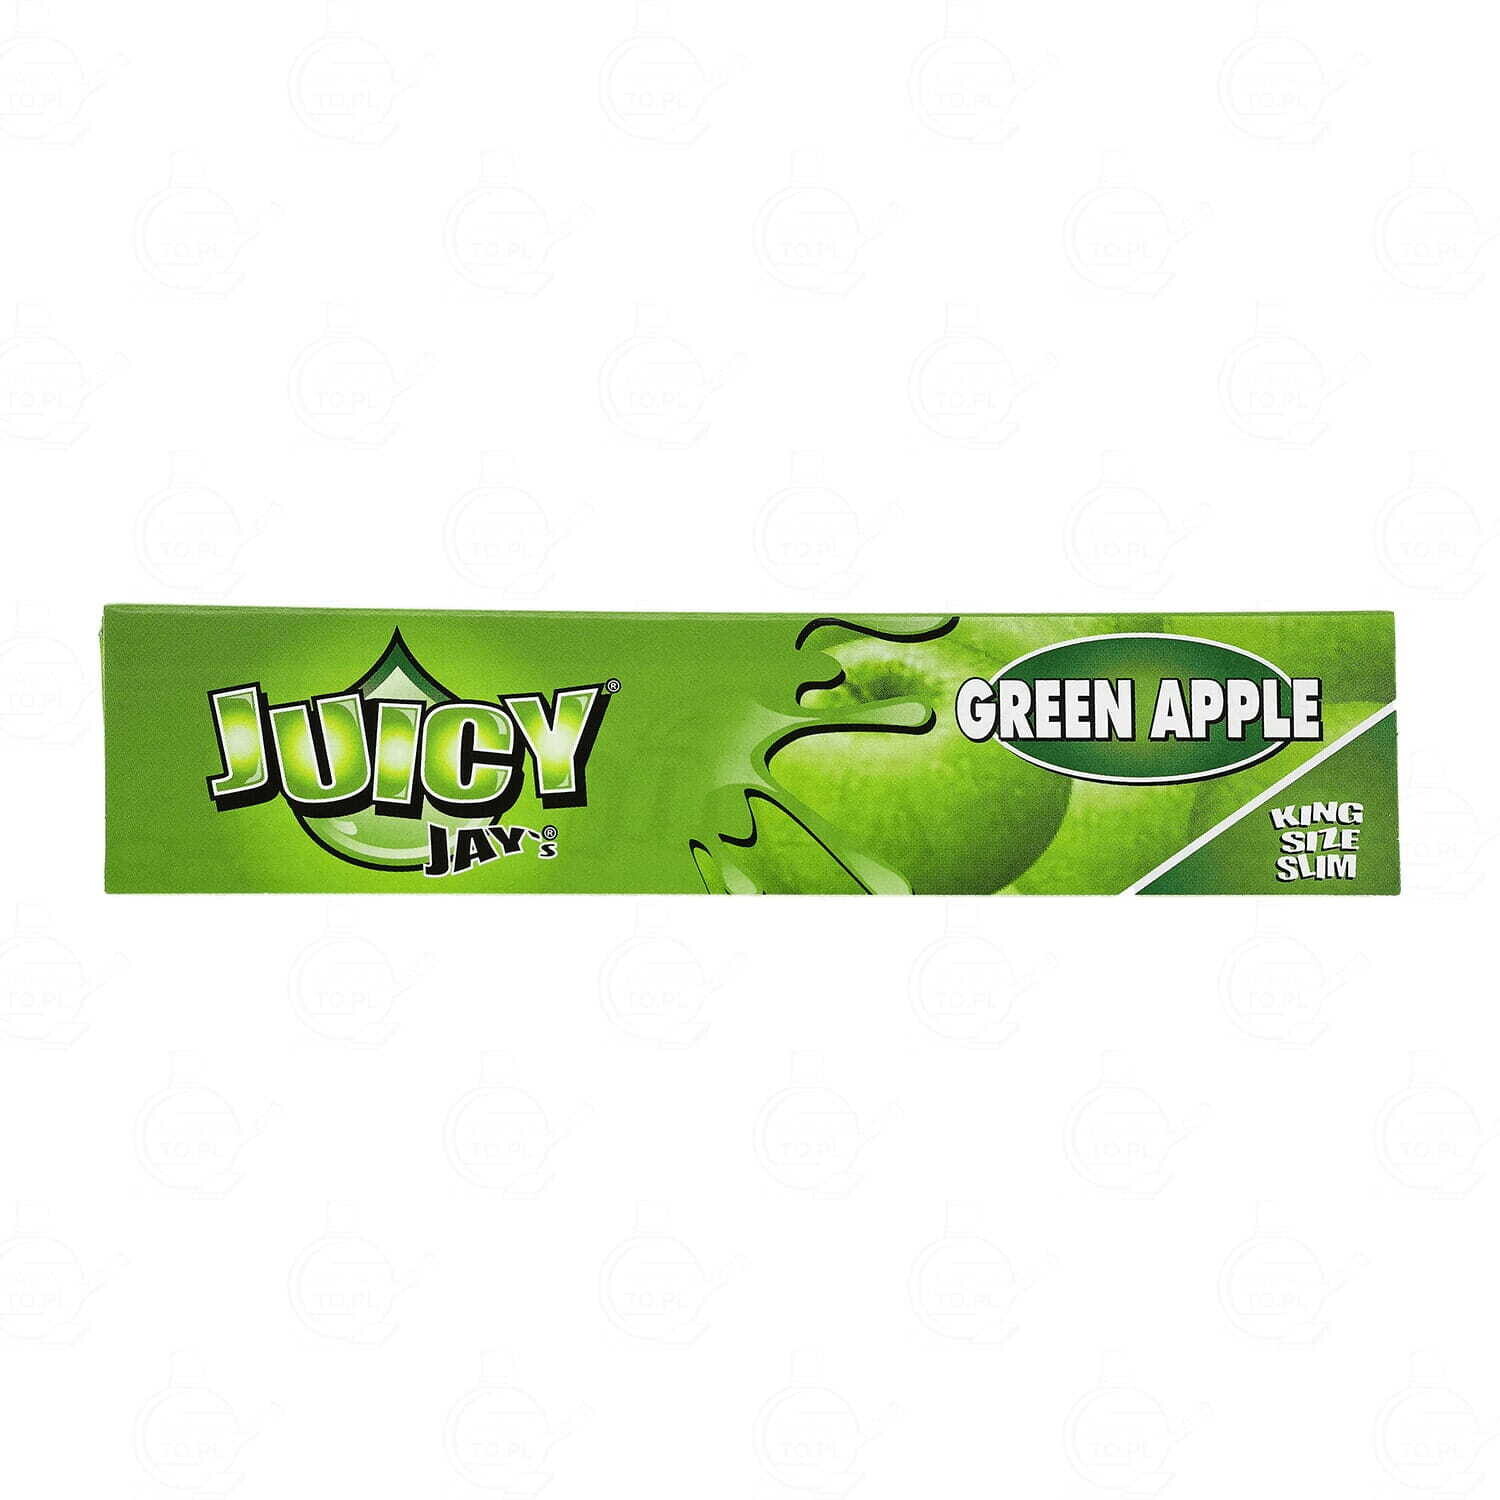 Juicy Jay's King Size Green Apple